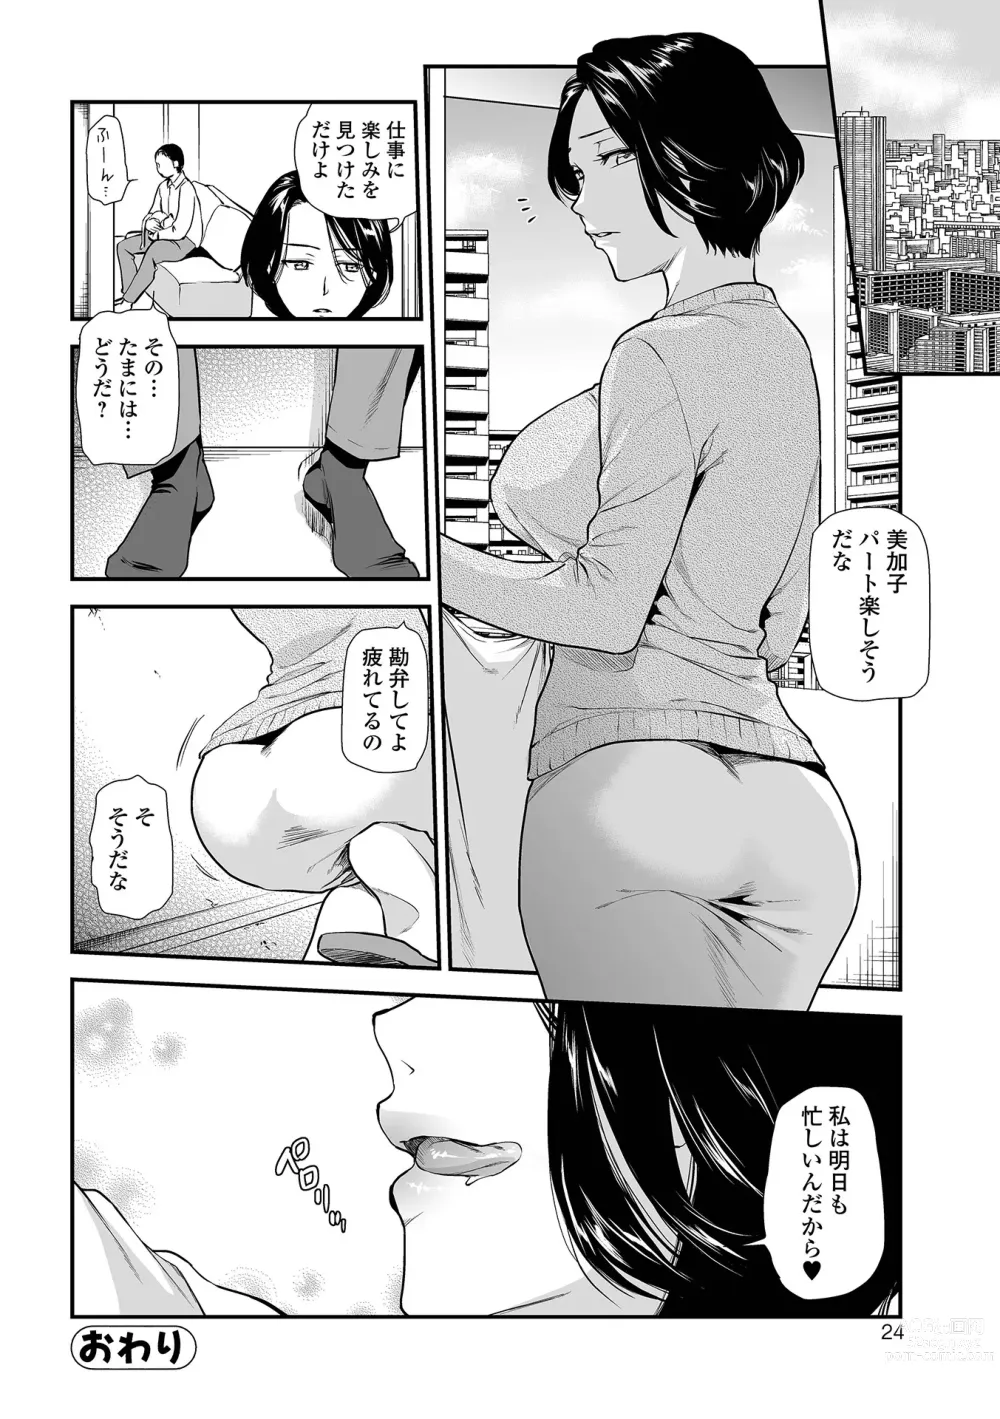 Page 24 of manga Tsuma to Ana